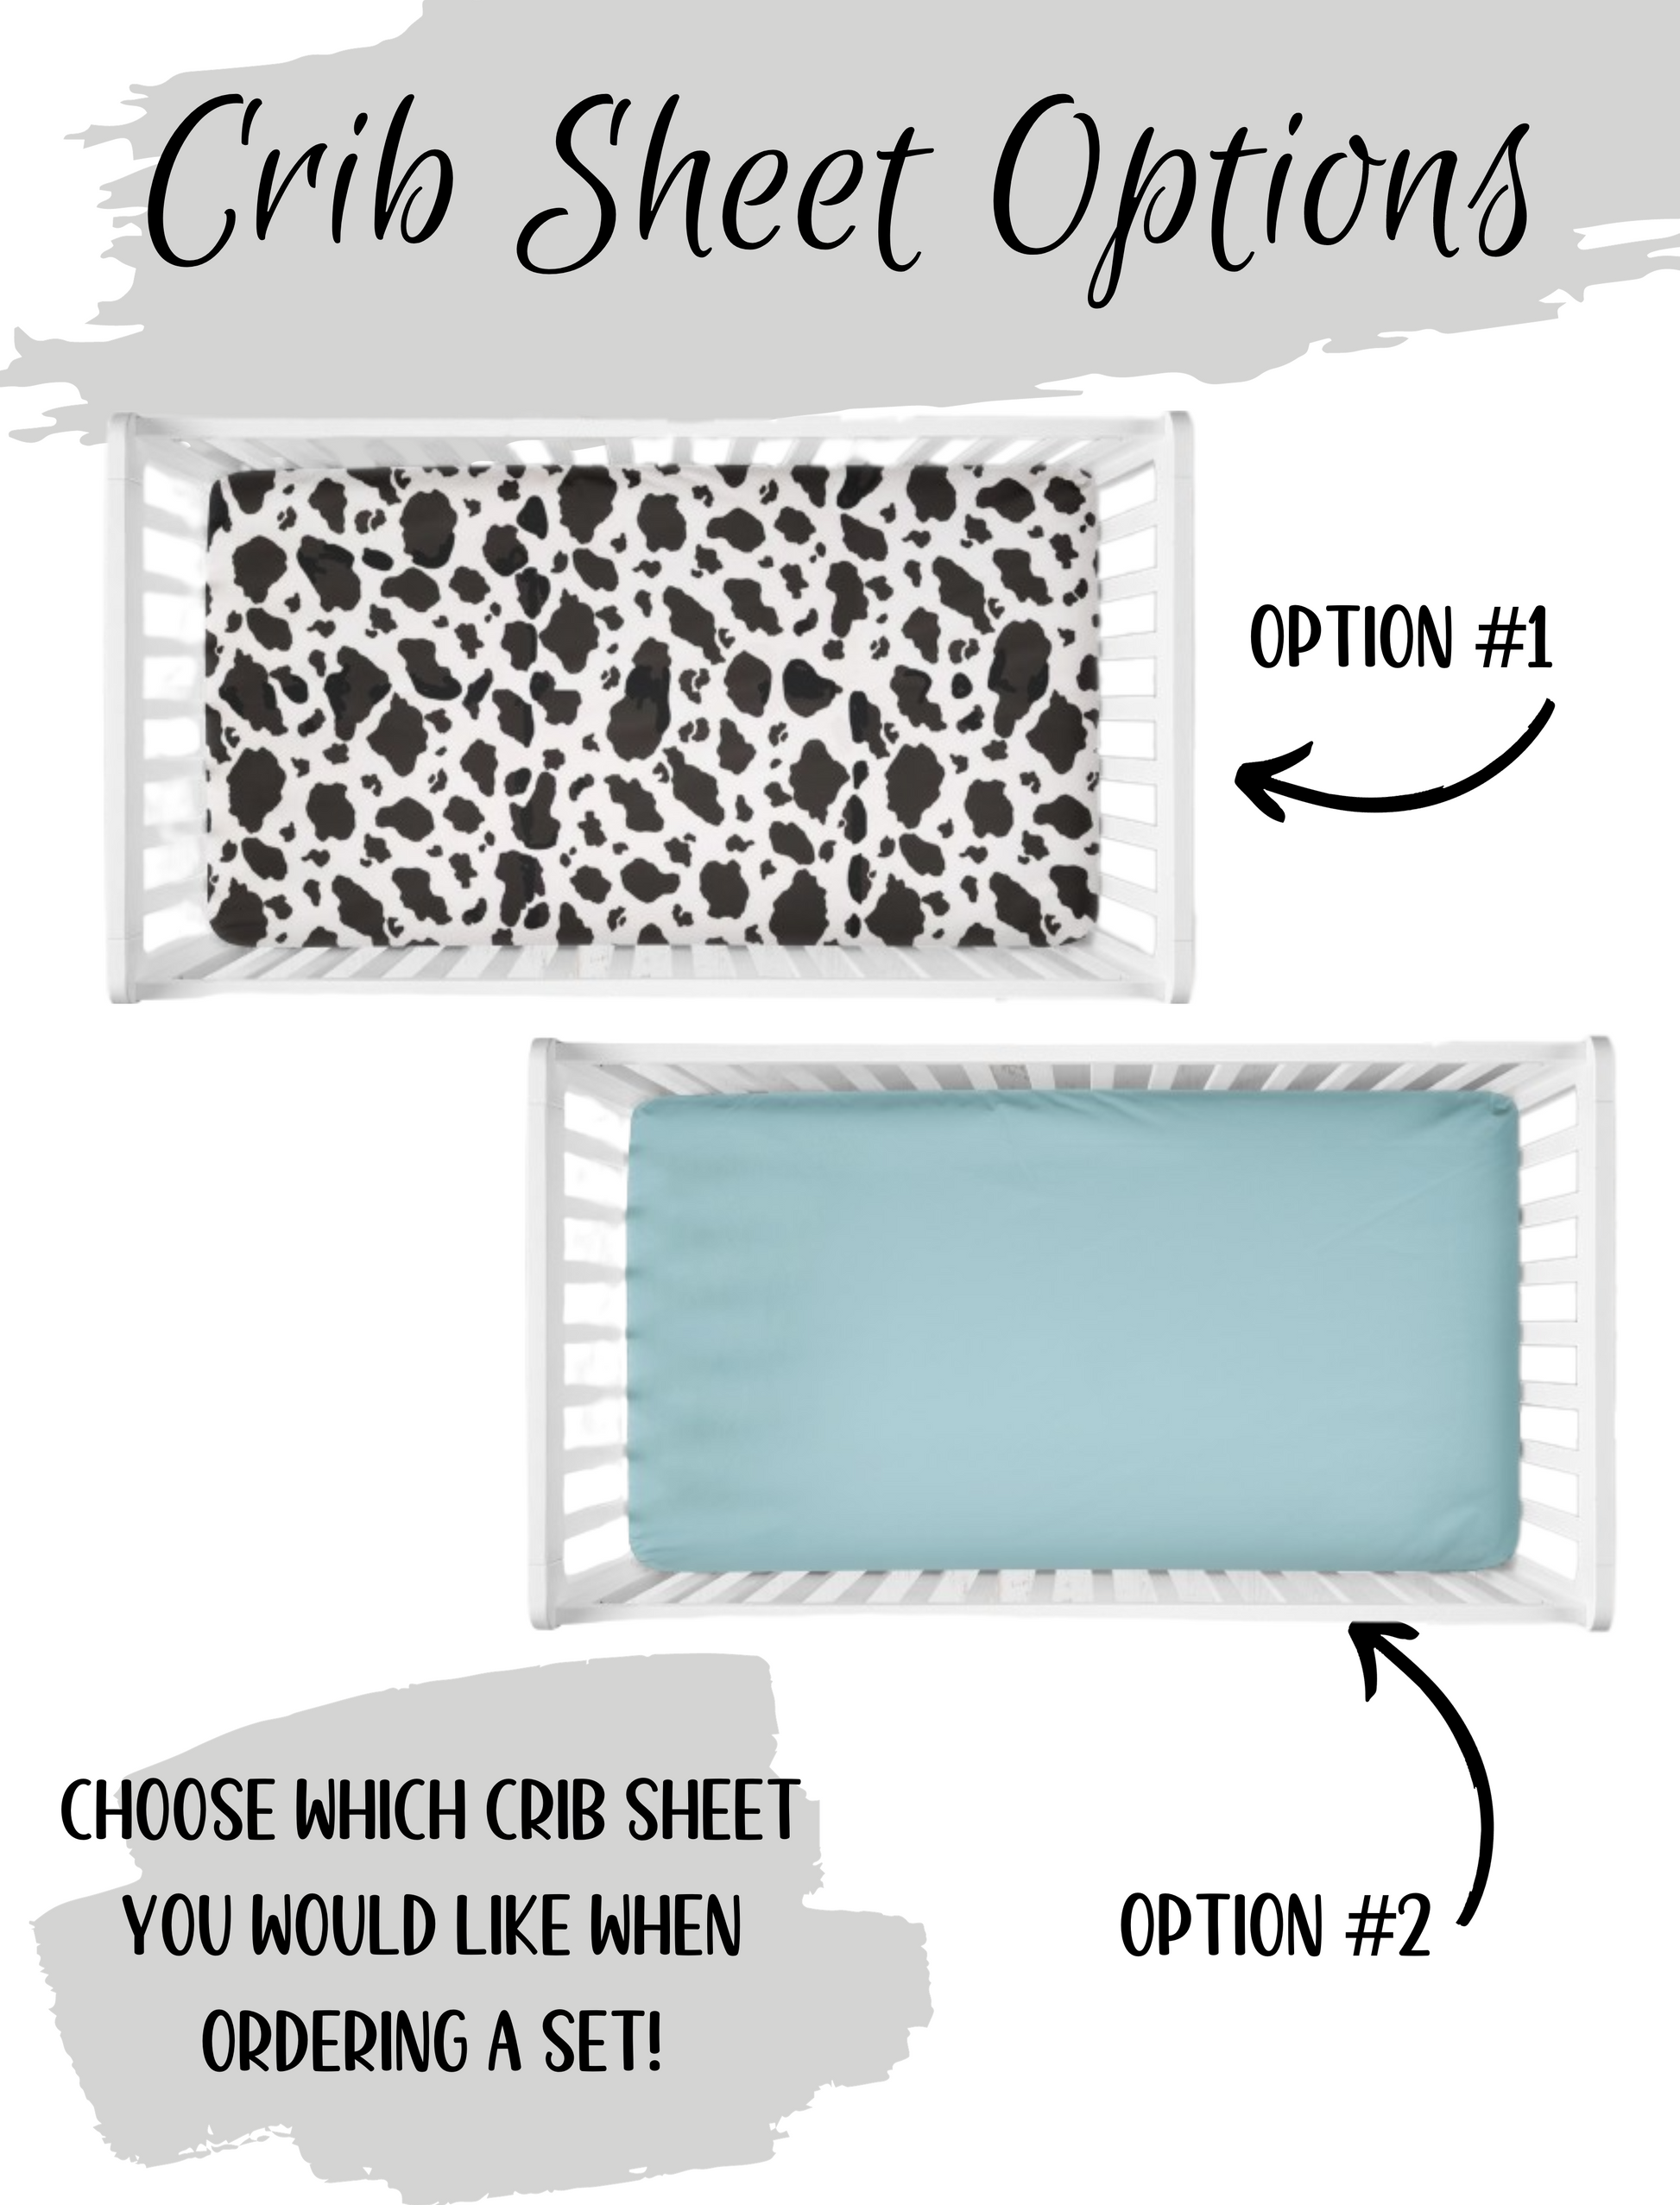 pick your crib sheet - aqua or cow print.